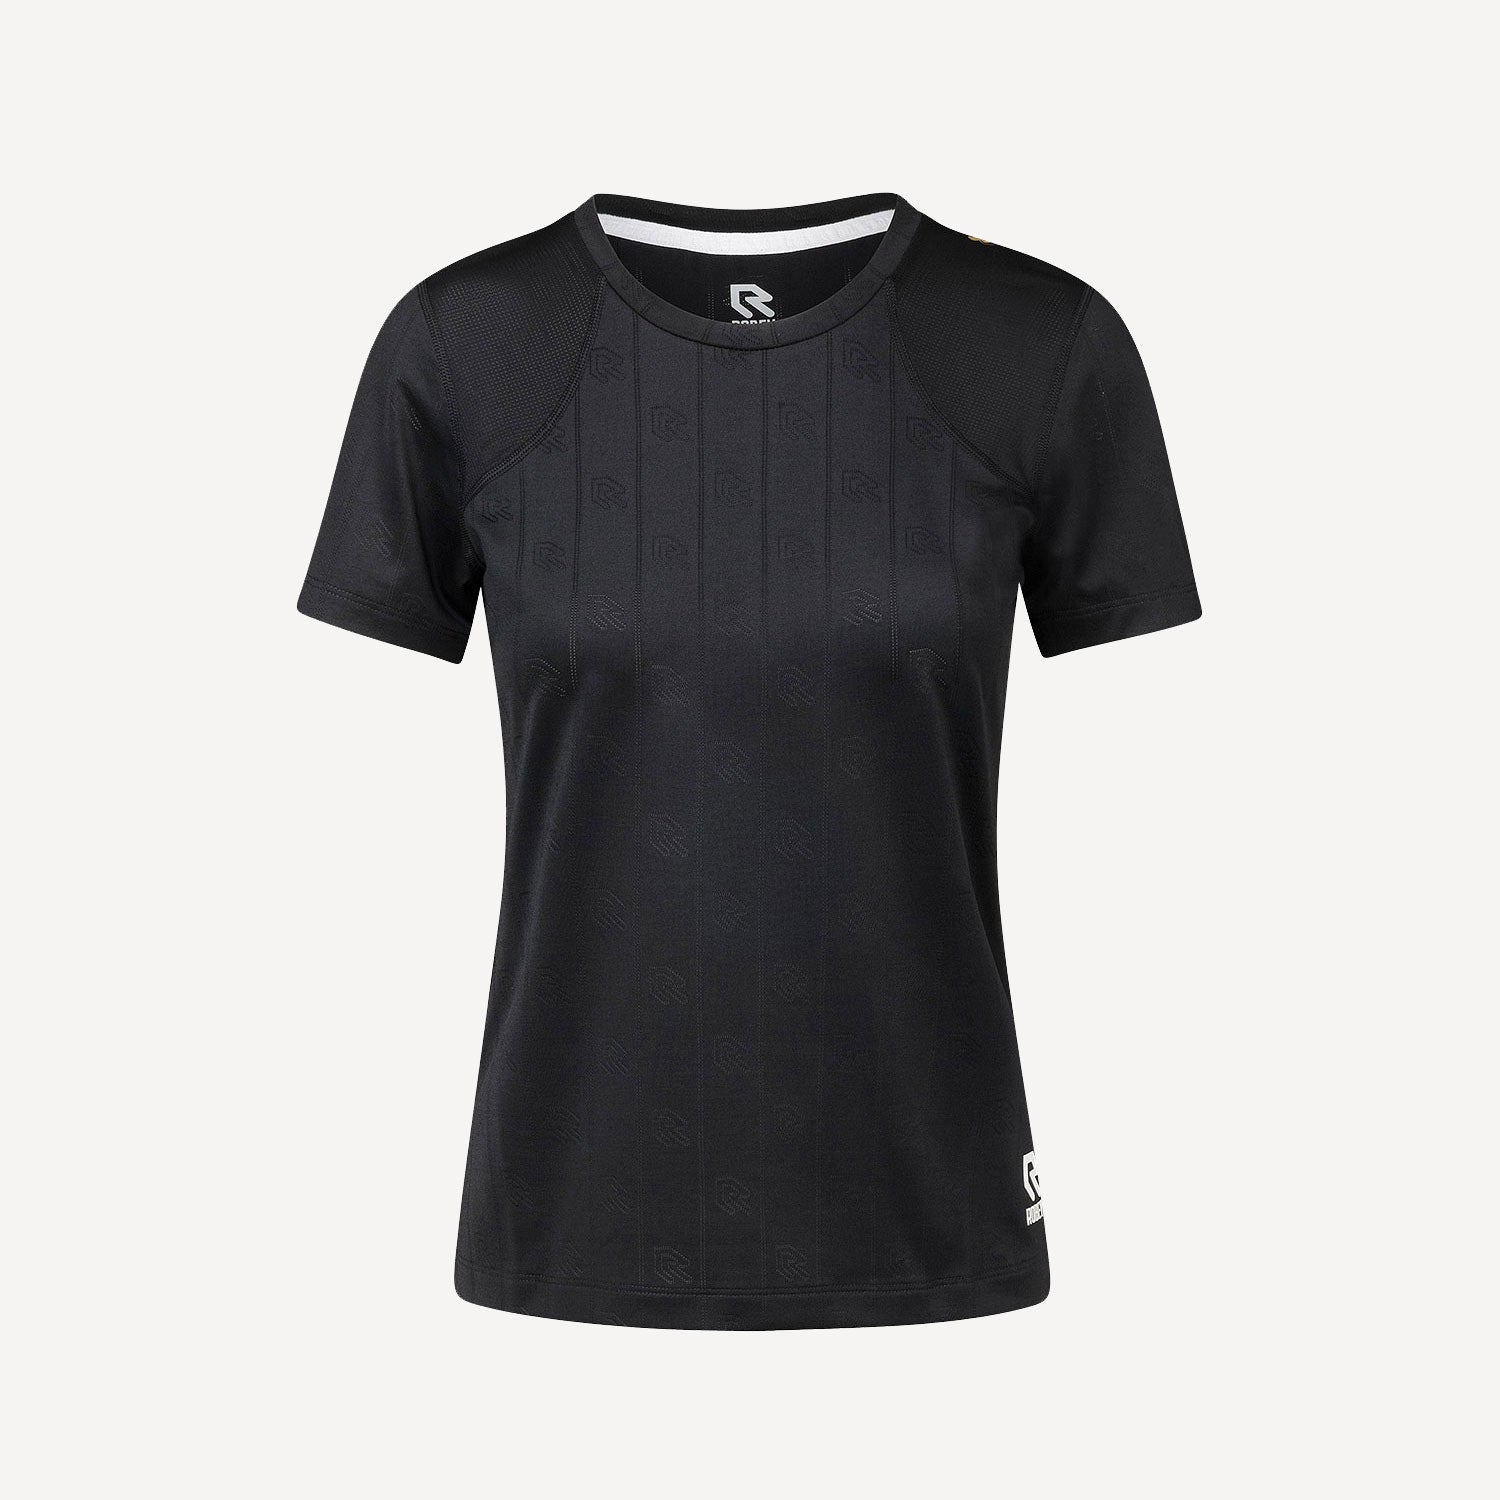 Robey Ace Women's Tennis Shirt - Black (1)